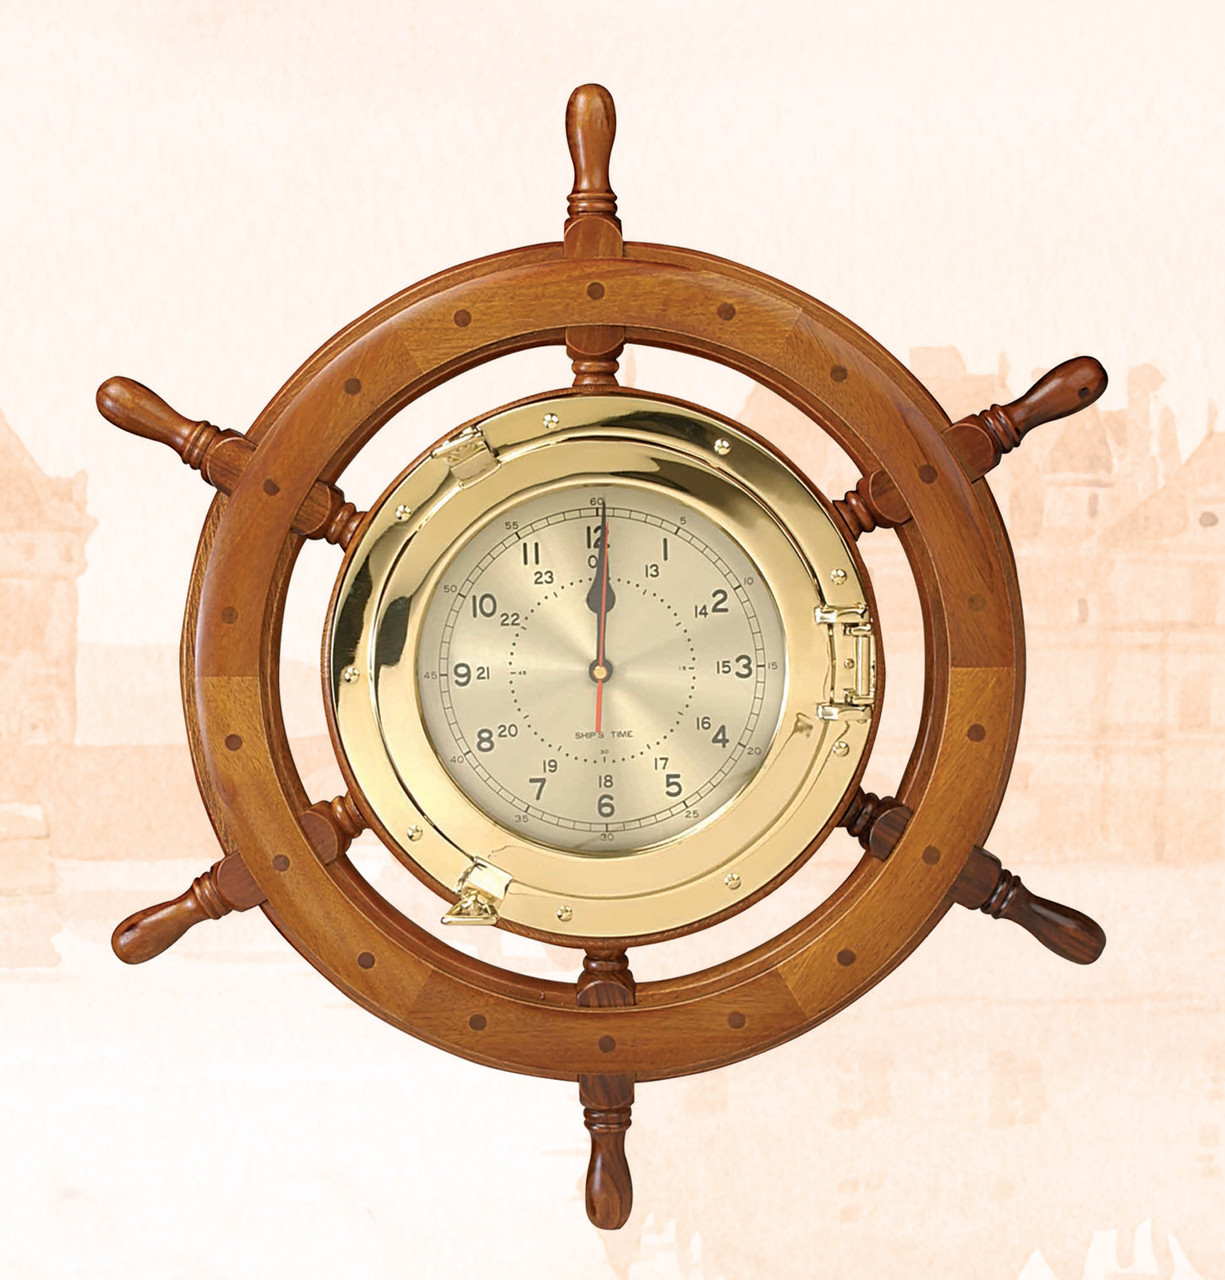 24 Ship Wheel PortHole Clock